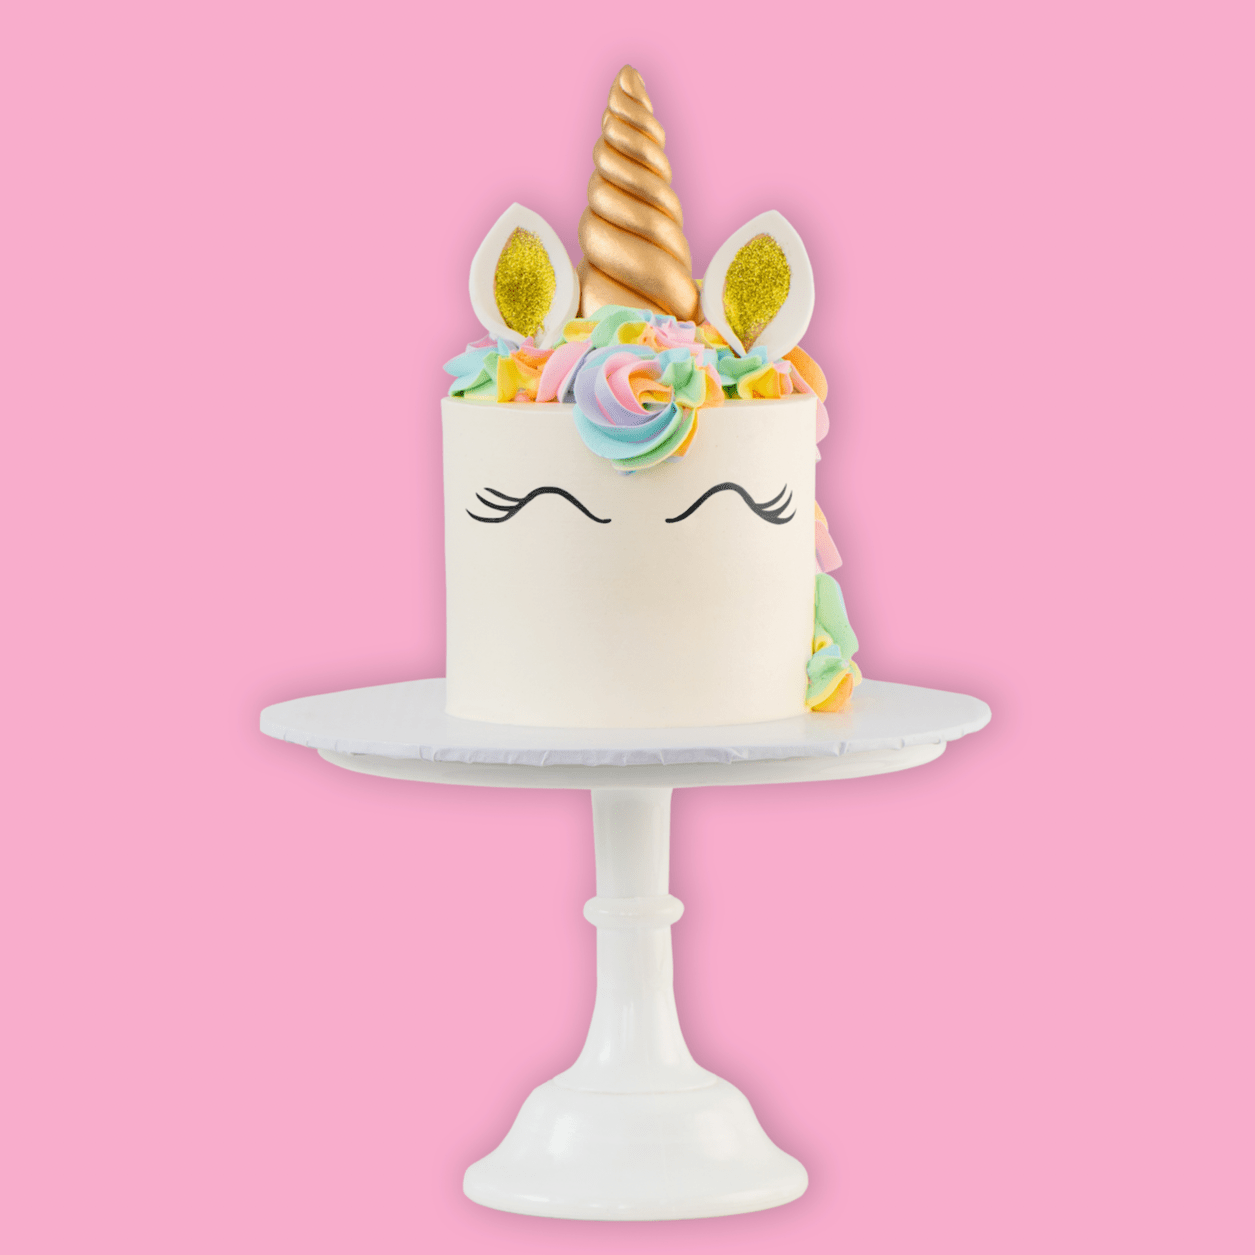 DIY Unicorn Cake Decorating Kit